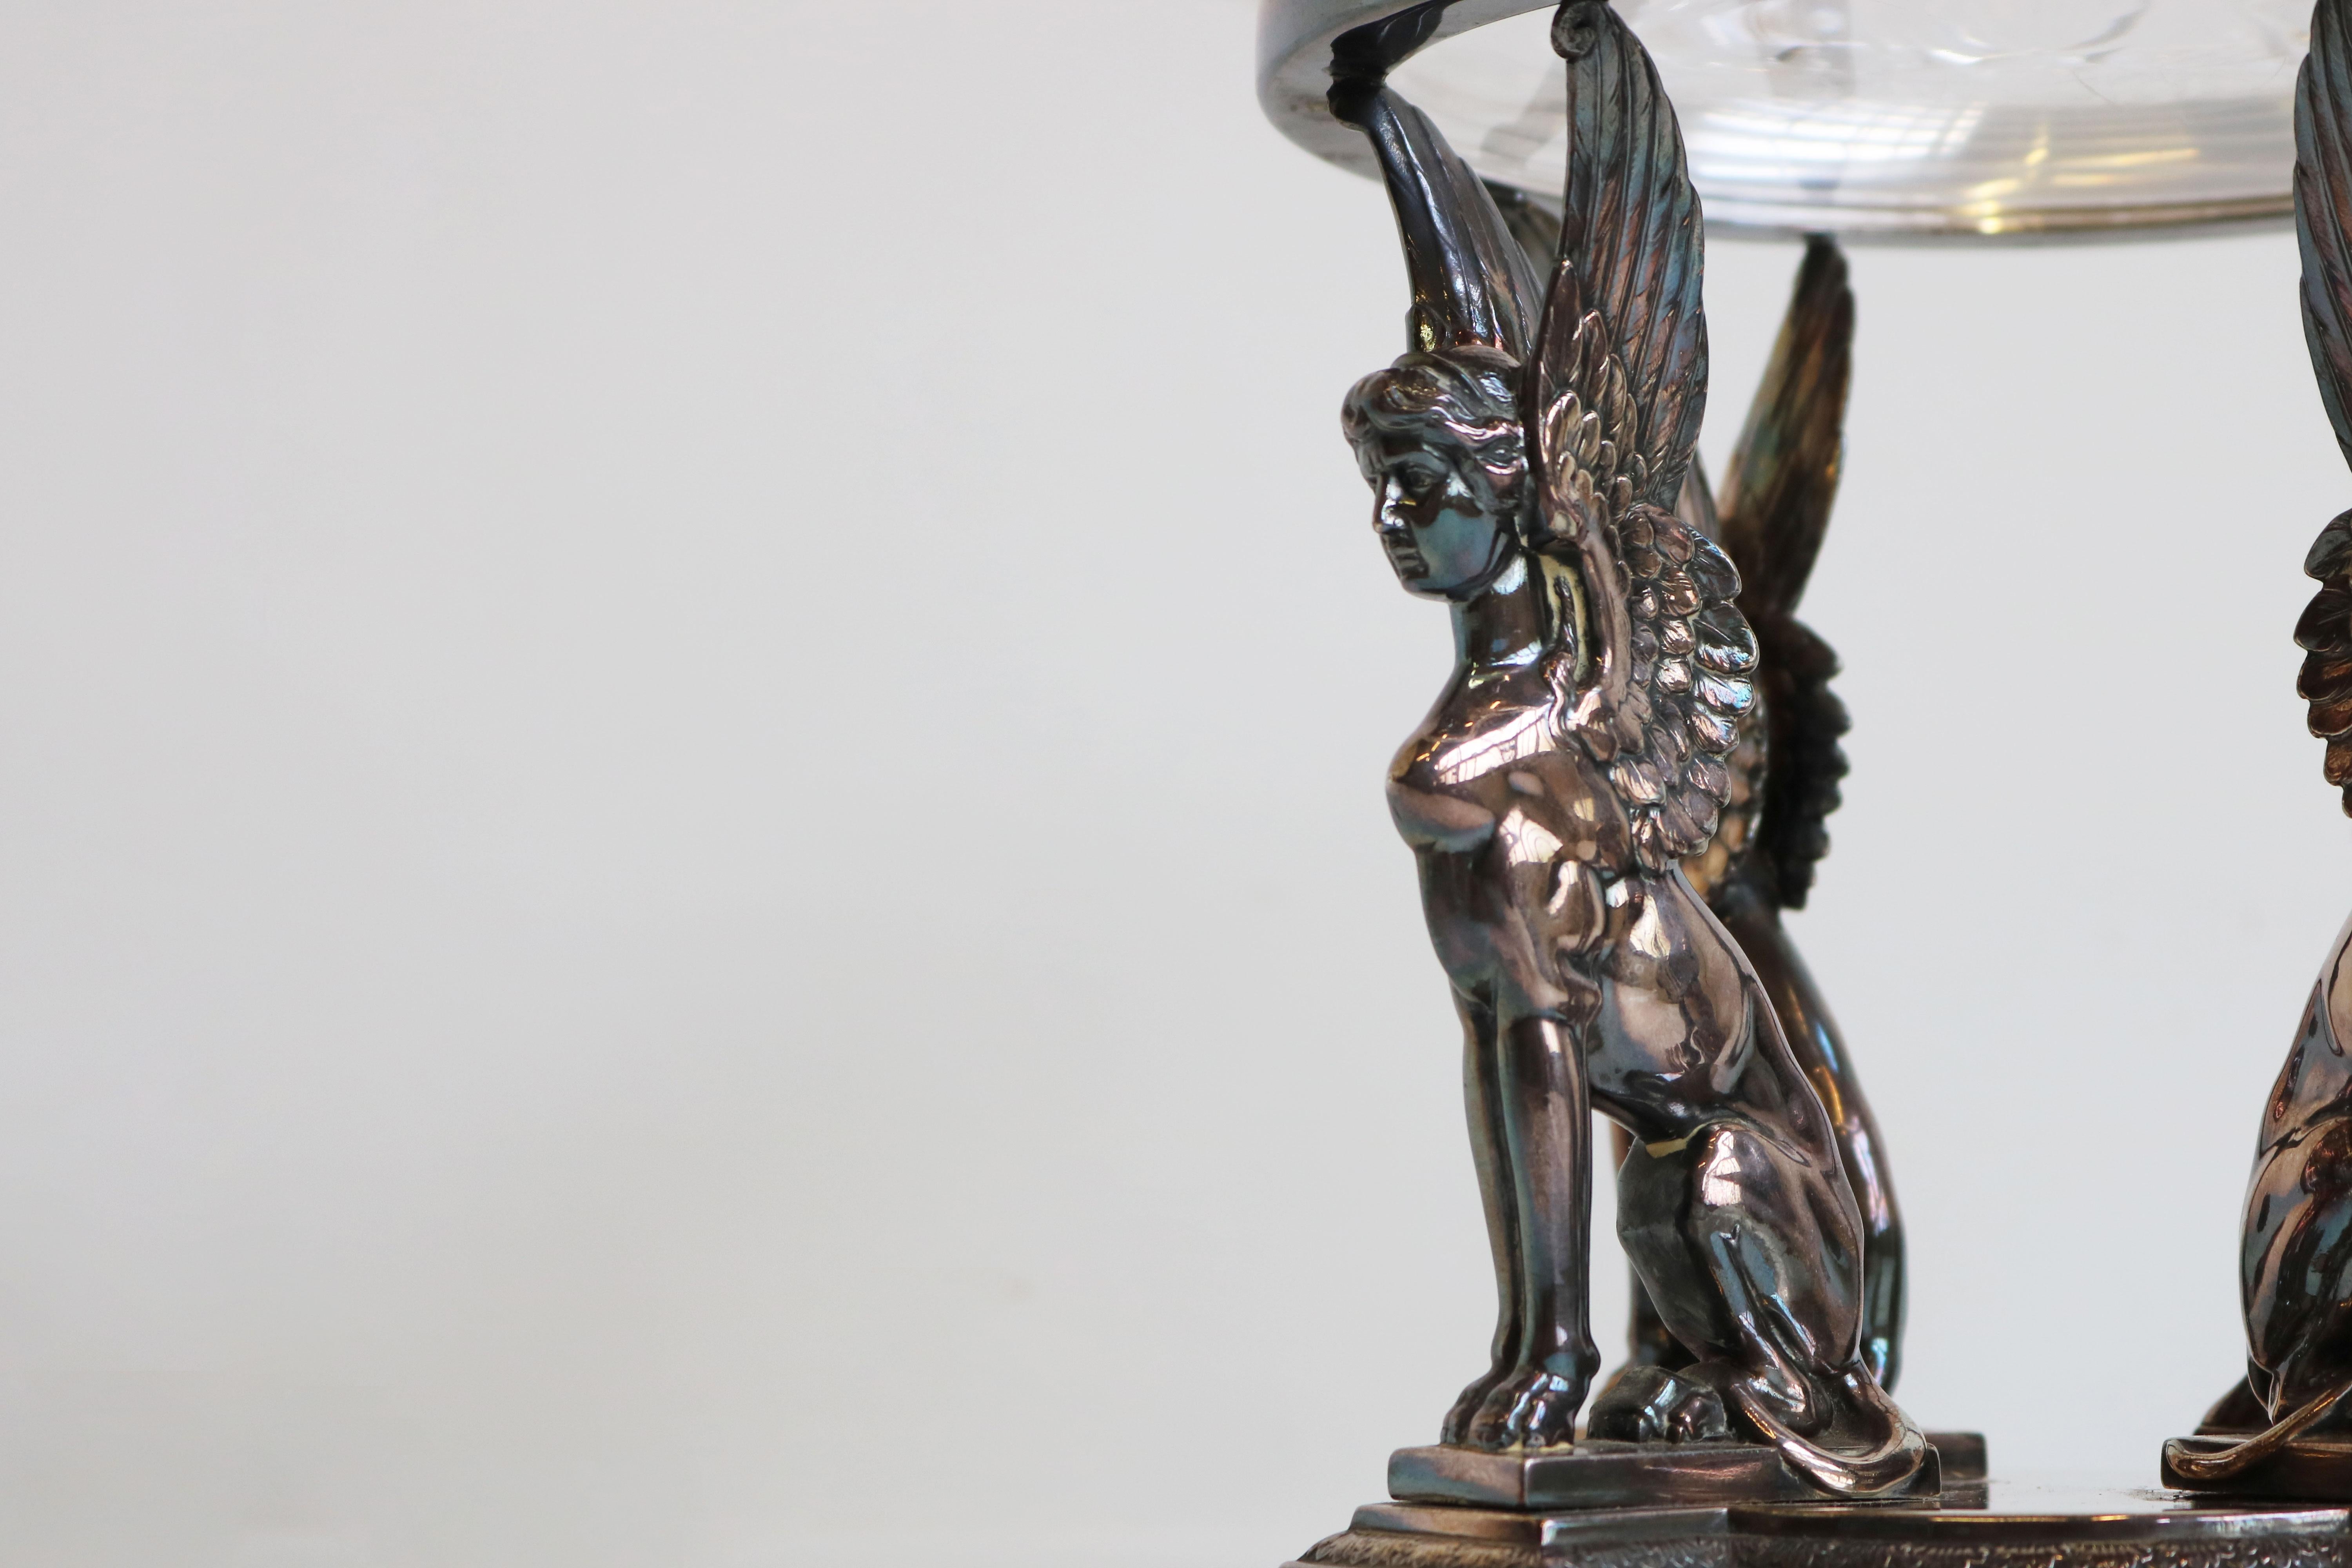 Antique WMF Art Nouveau Centerpiece Silver Plated Crystal Glass Egyptian Revival For Sale 2